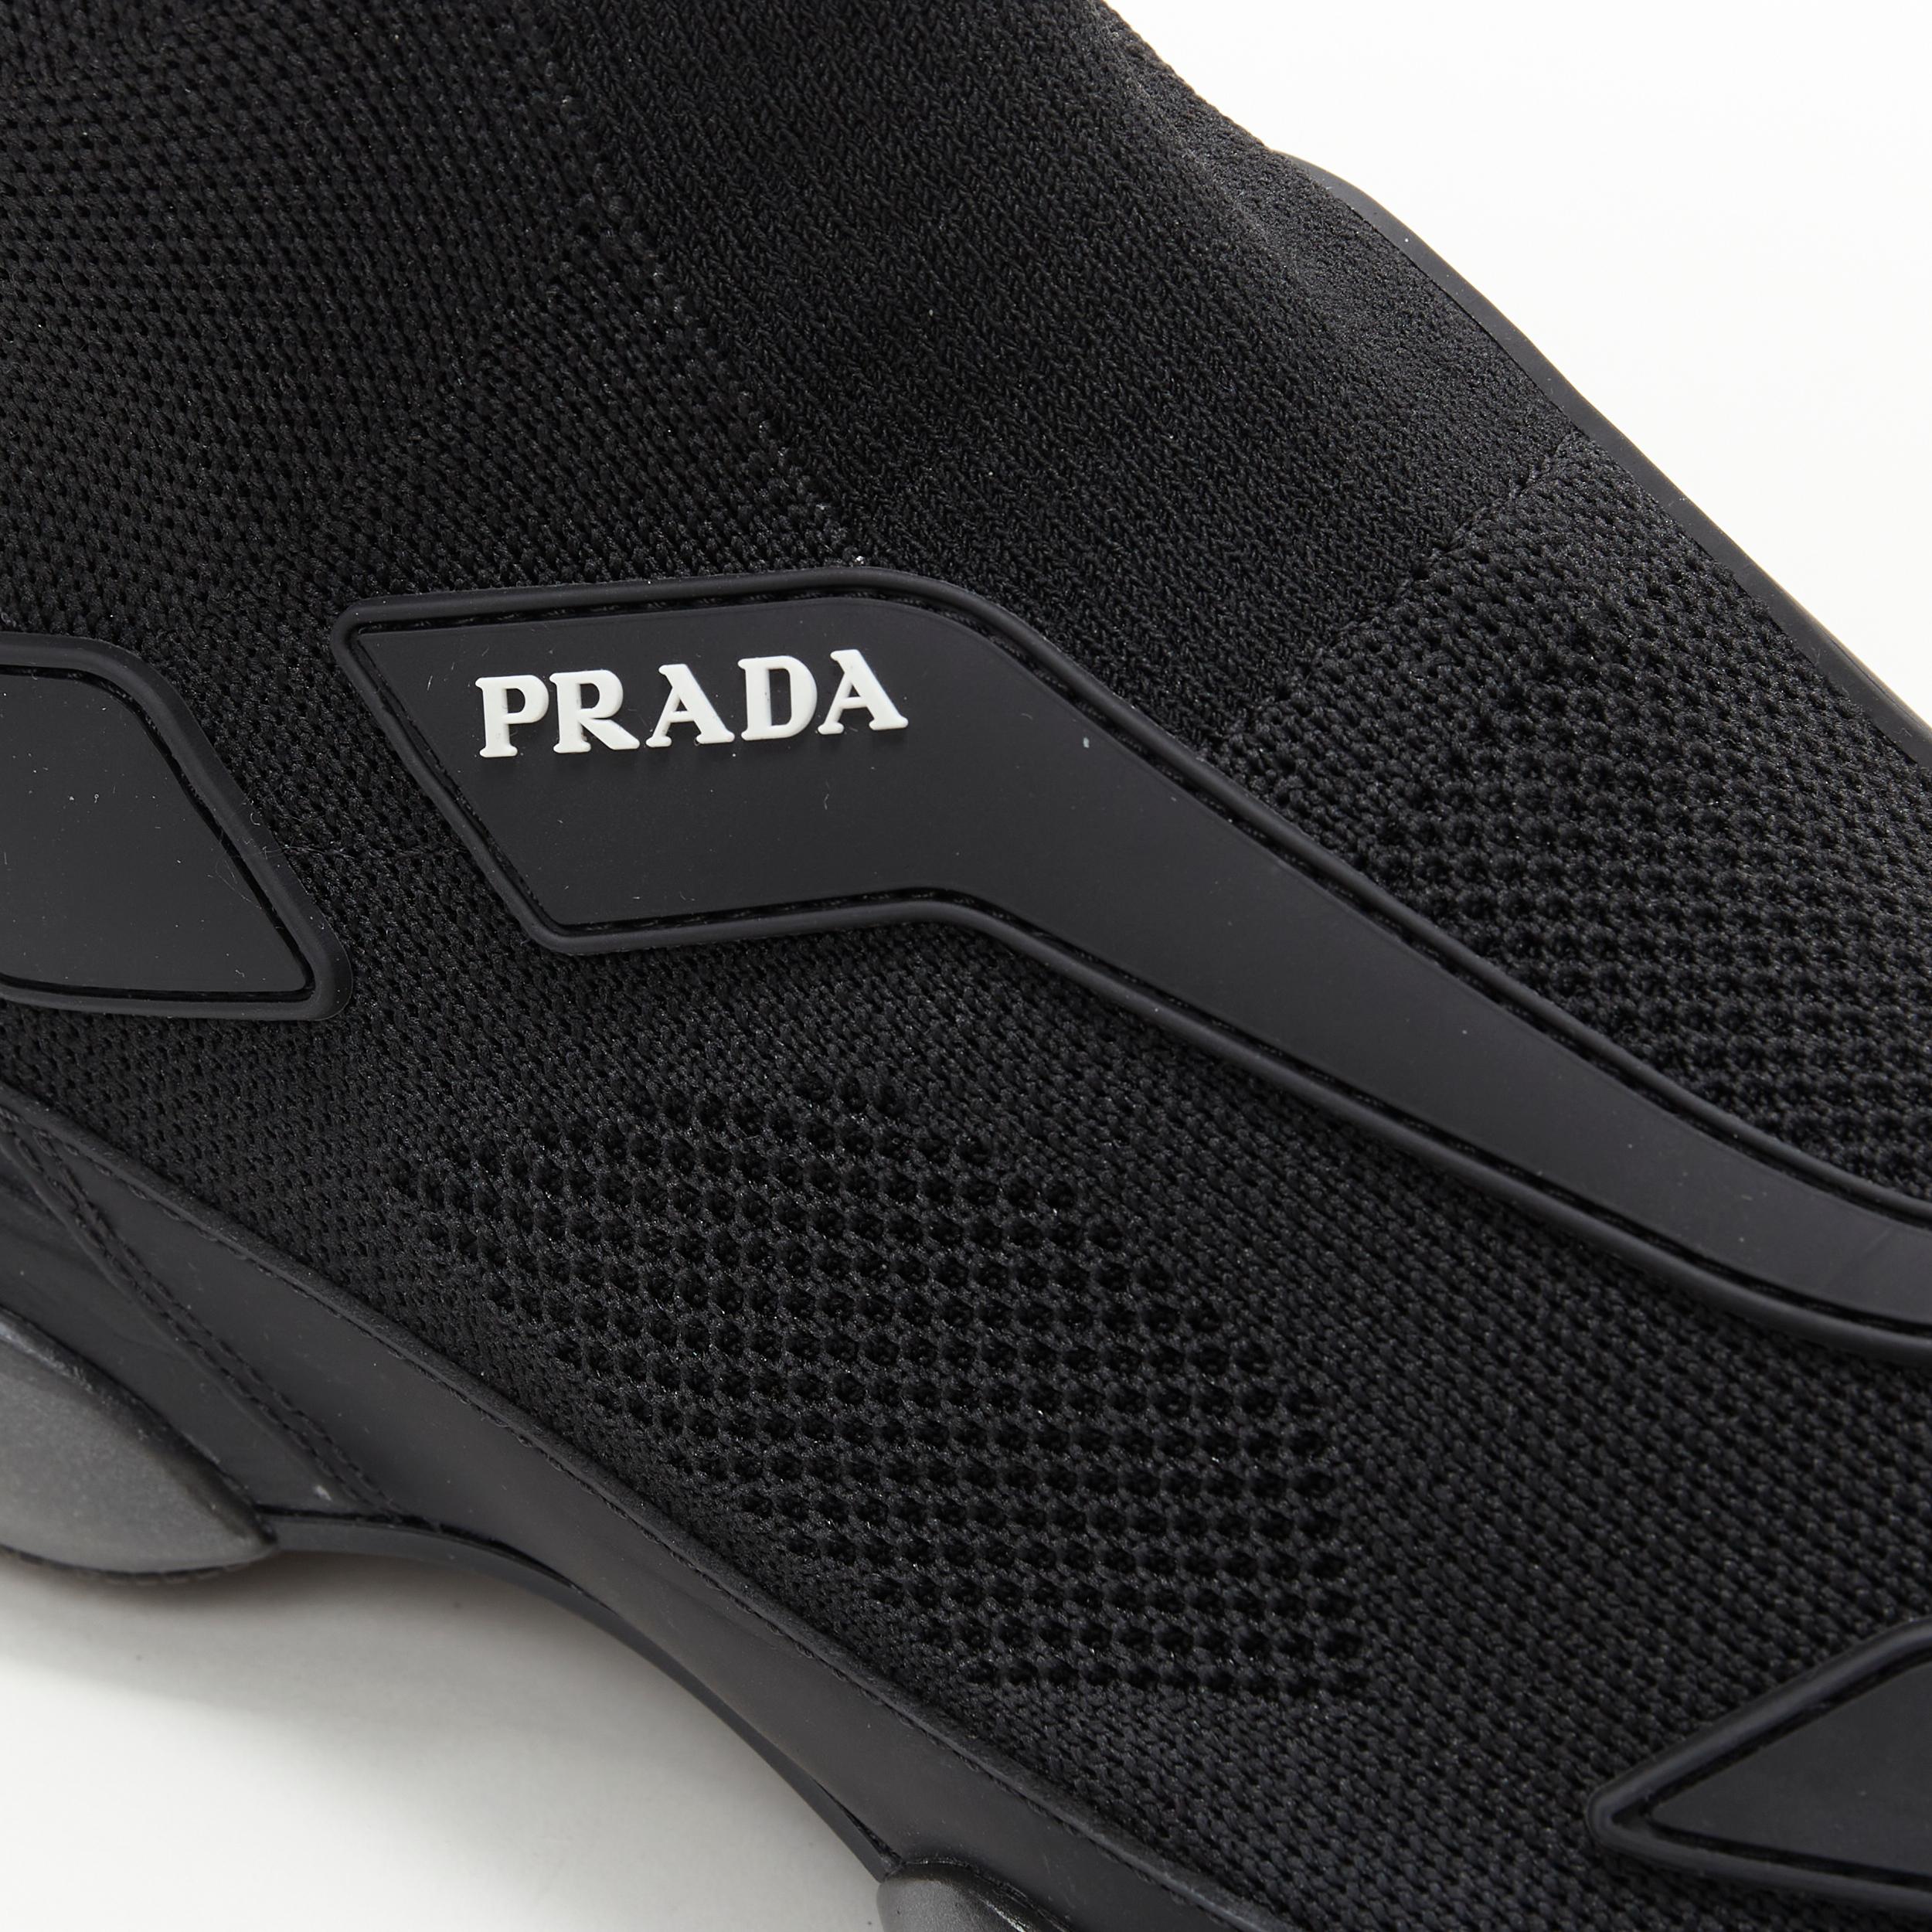 new PRADA 2017 Cloudbust black knit high top metal midsole sneaker UK7.5 EU41.5 2